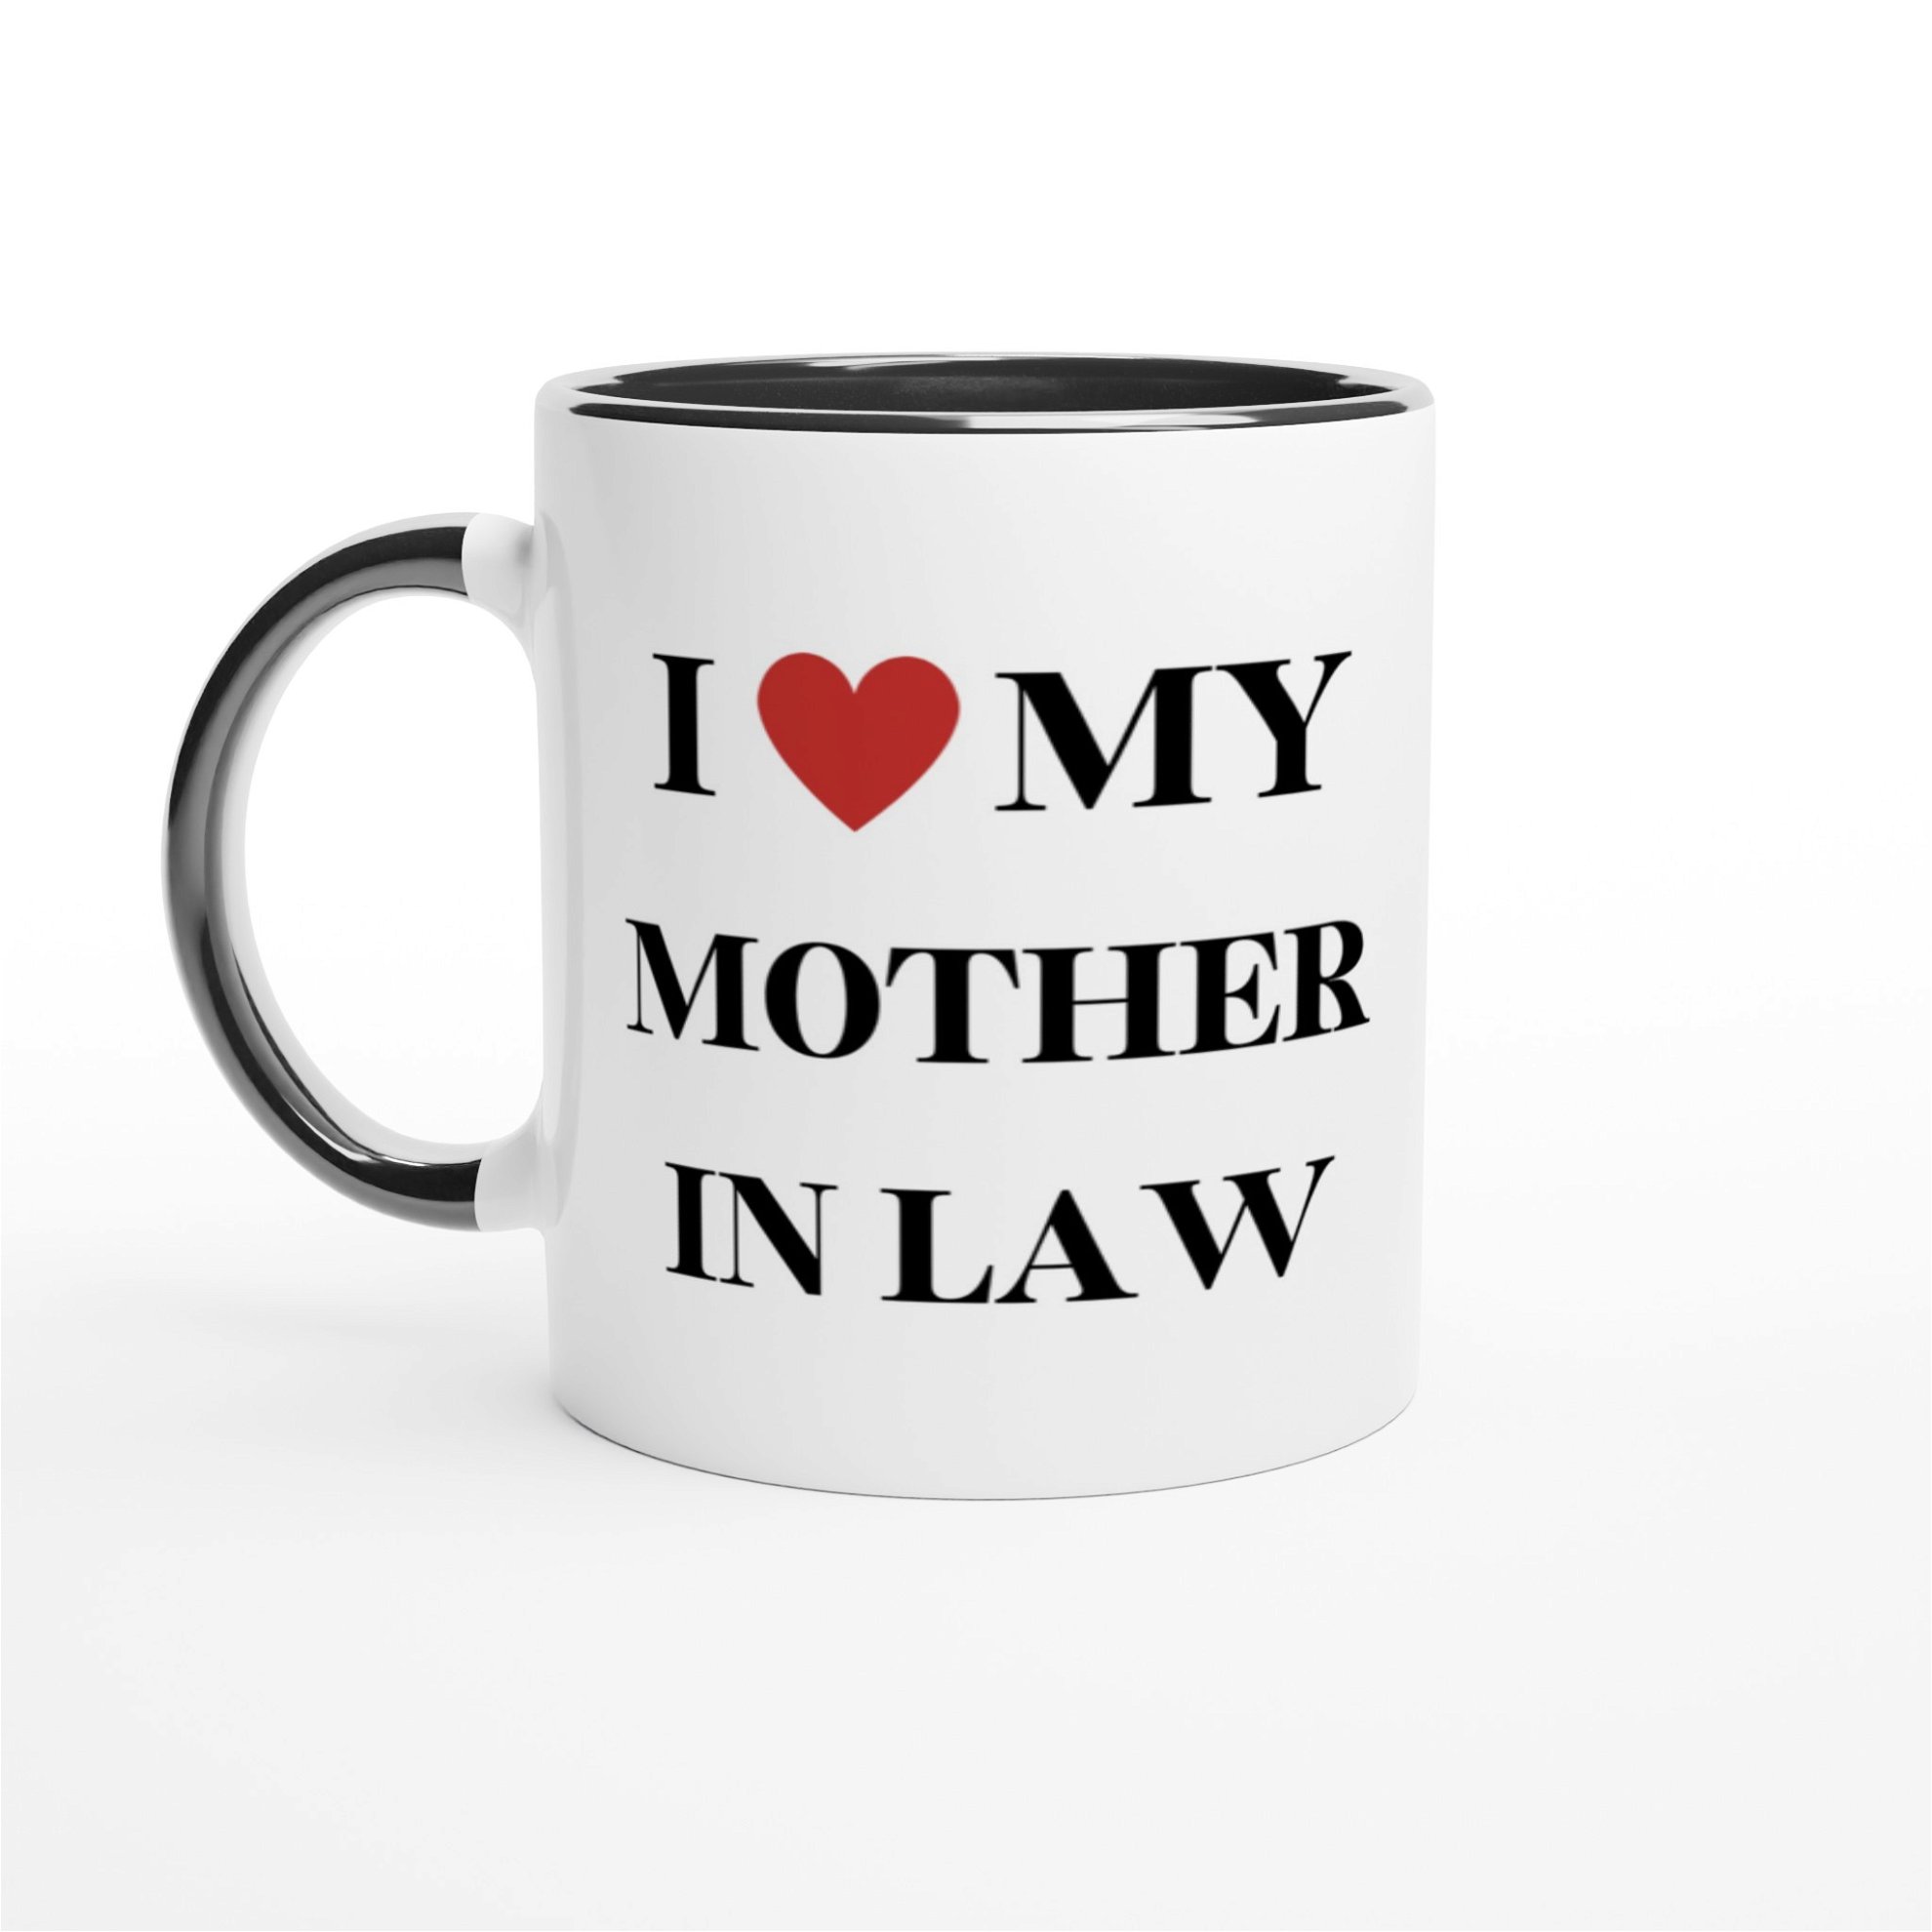 I love my mother in law mug